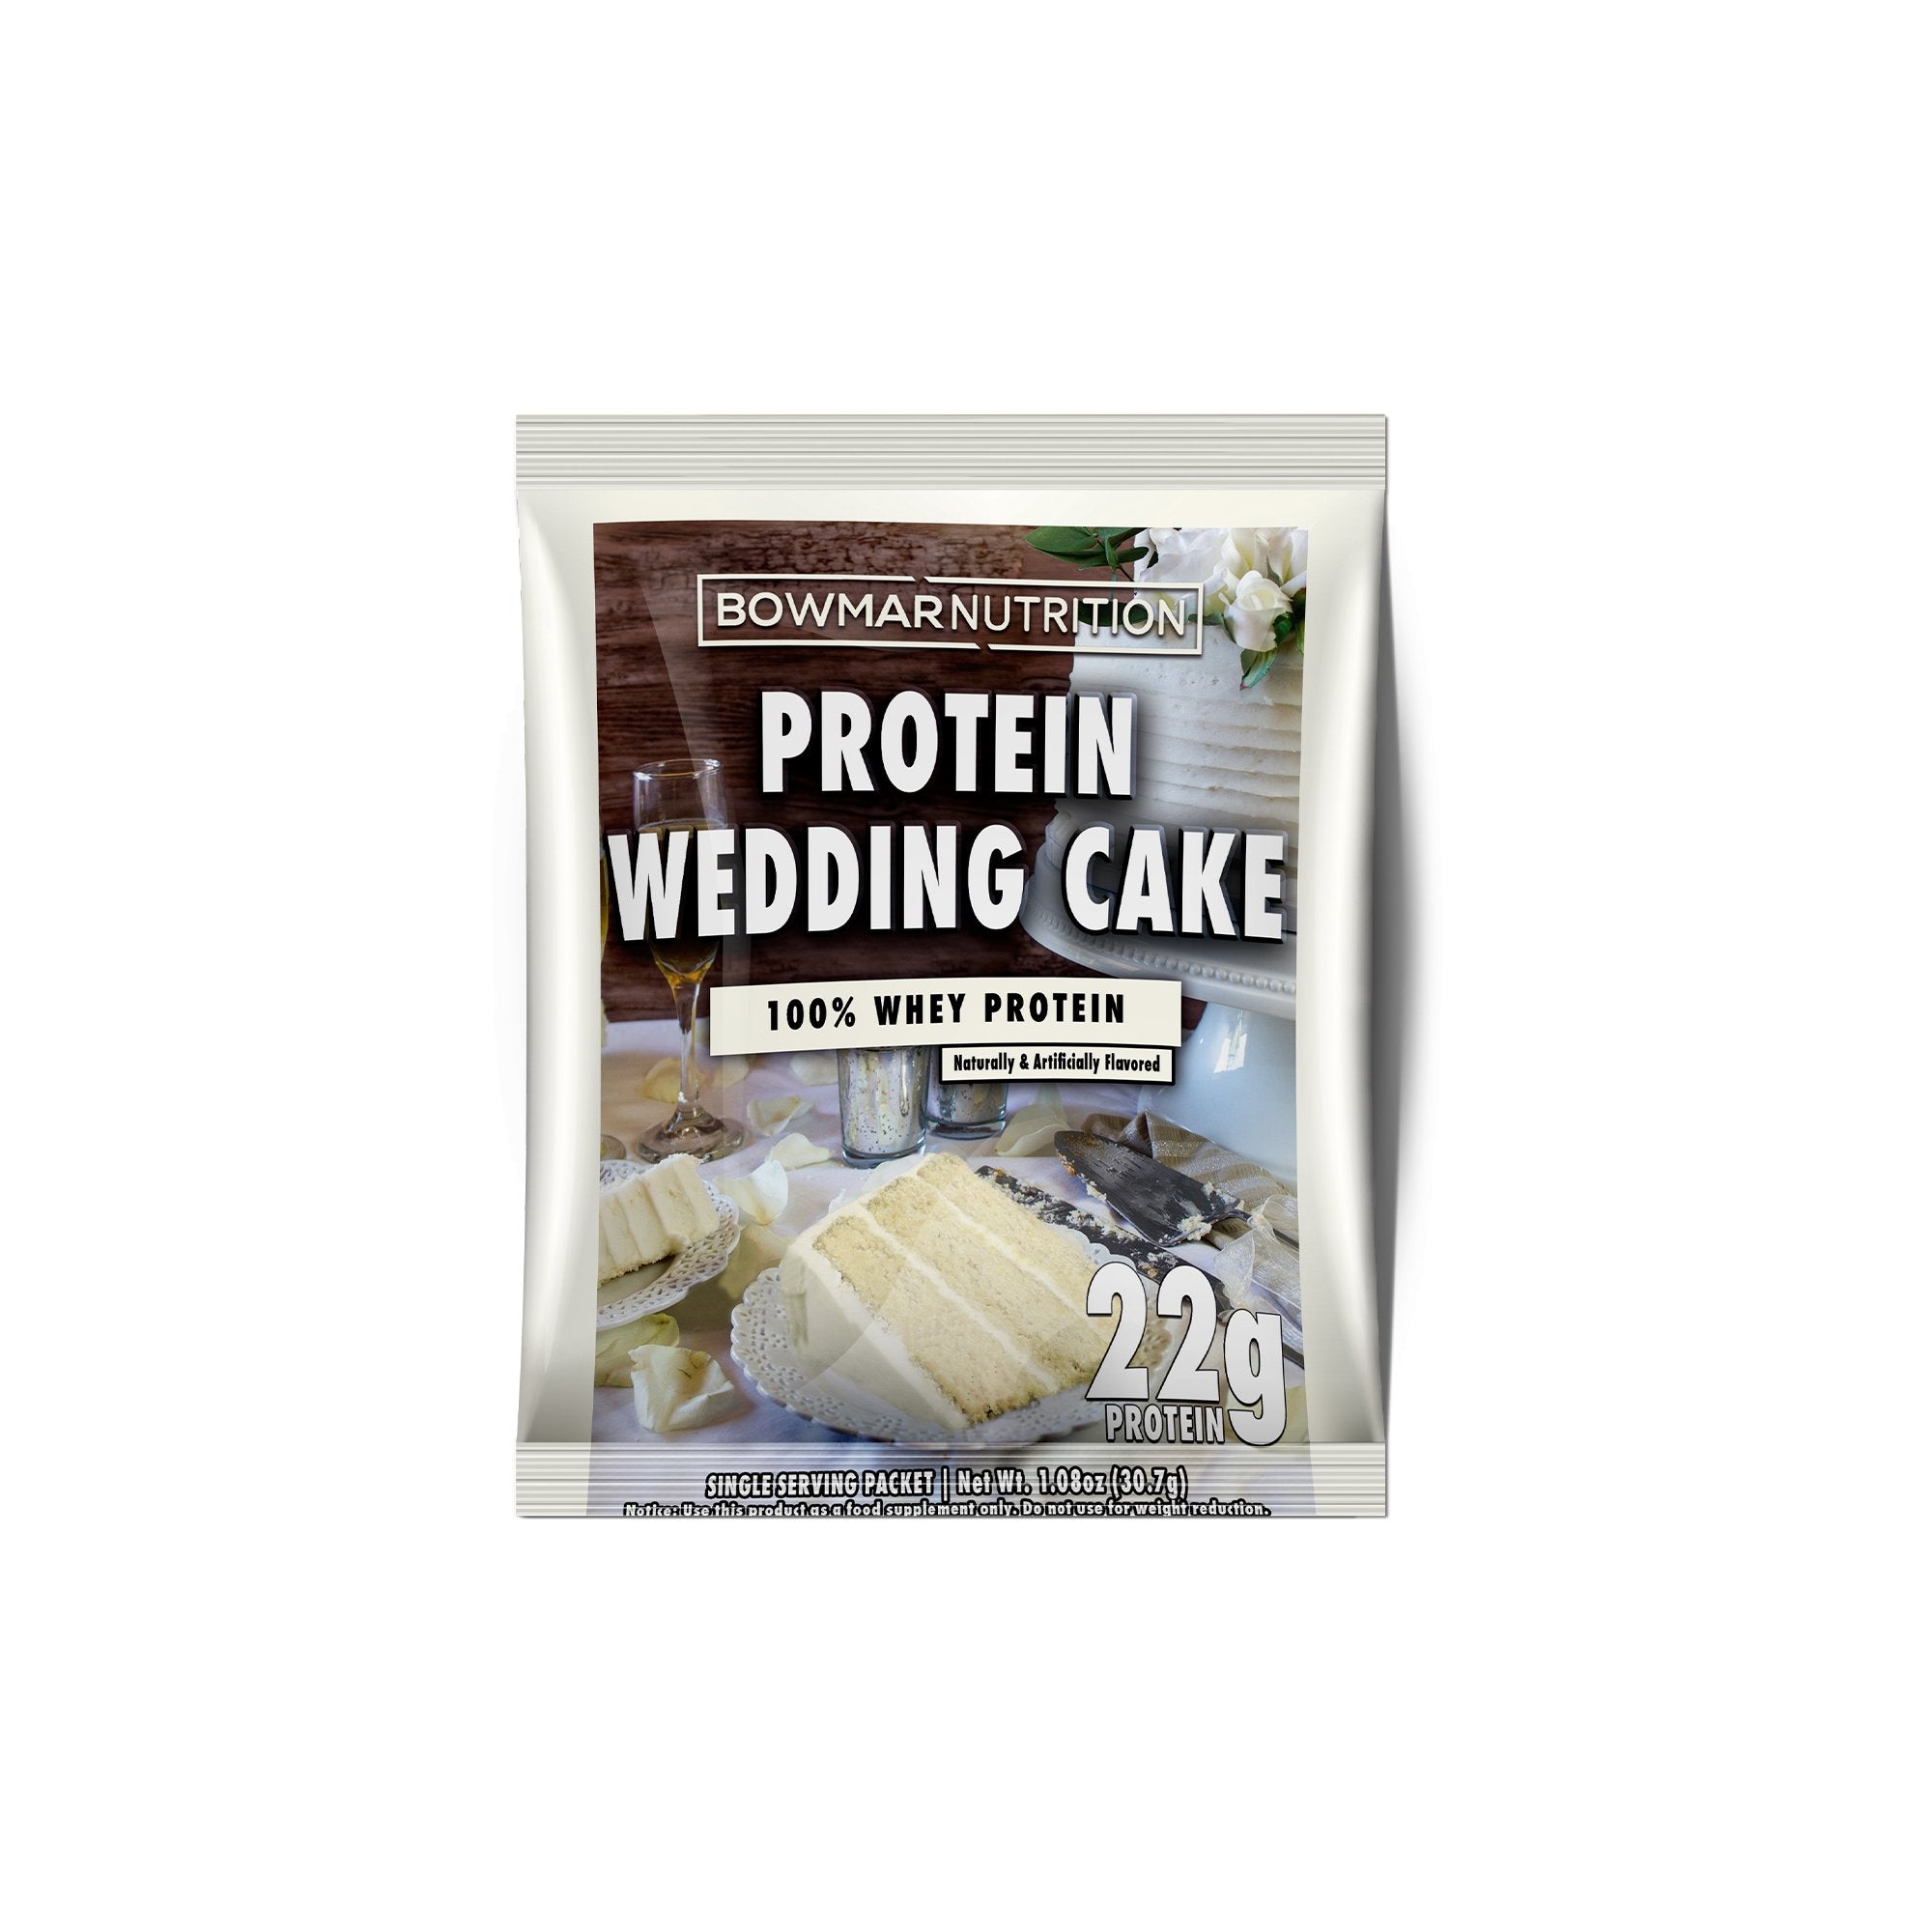 Bowmar Whey Protein Powder Sample (1 serving) bowmar-protein-powder-sachet-1-packet Protein Snacks Wedding Cake bowmar